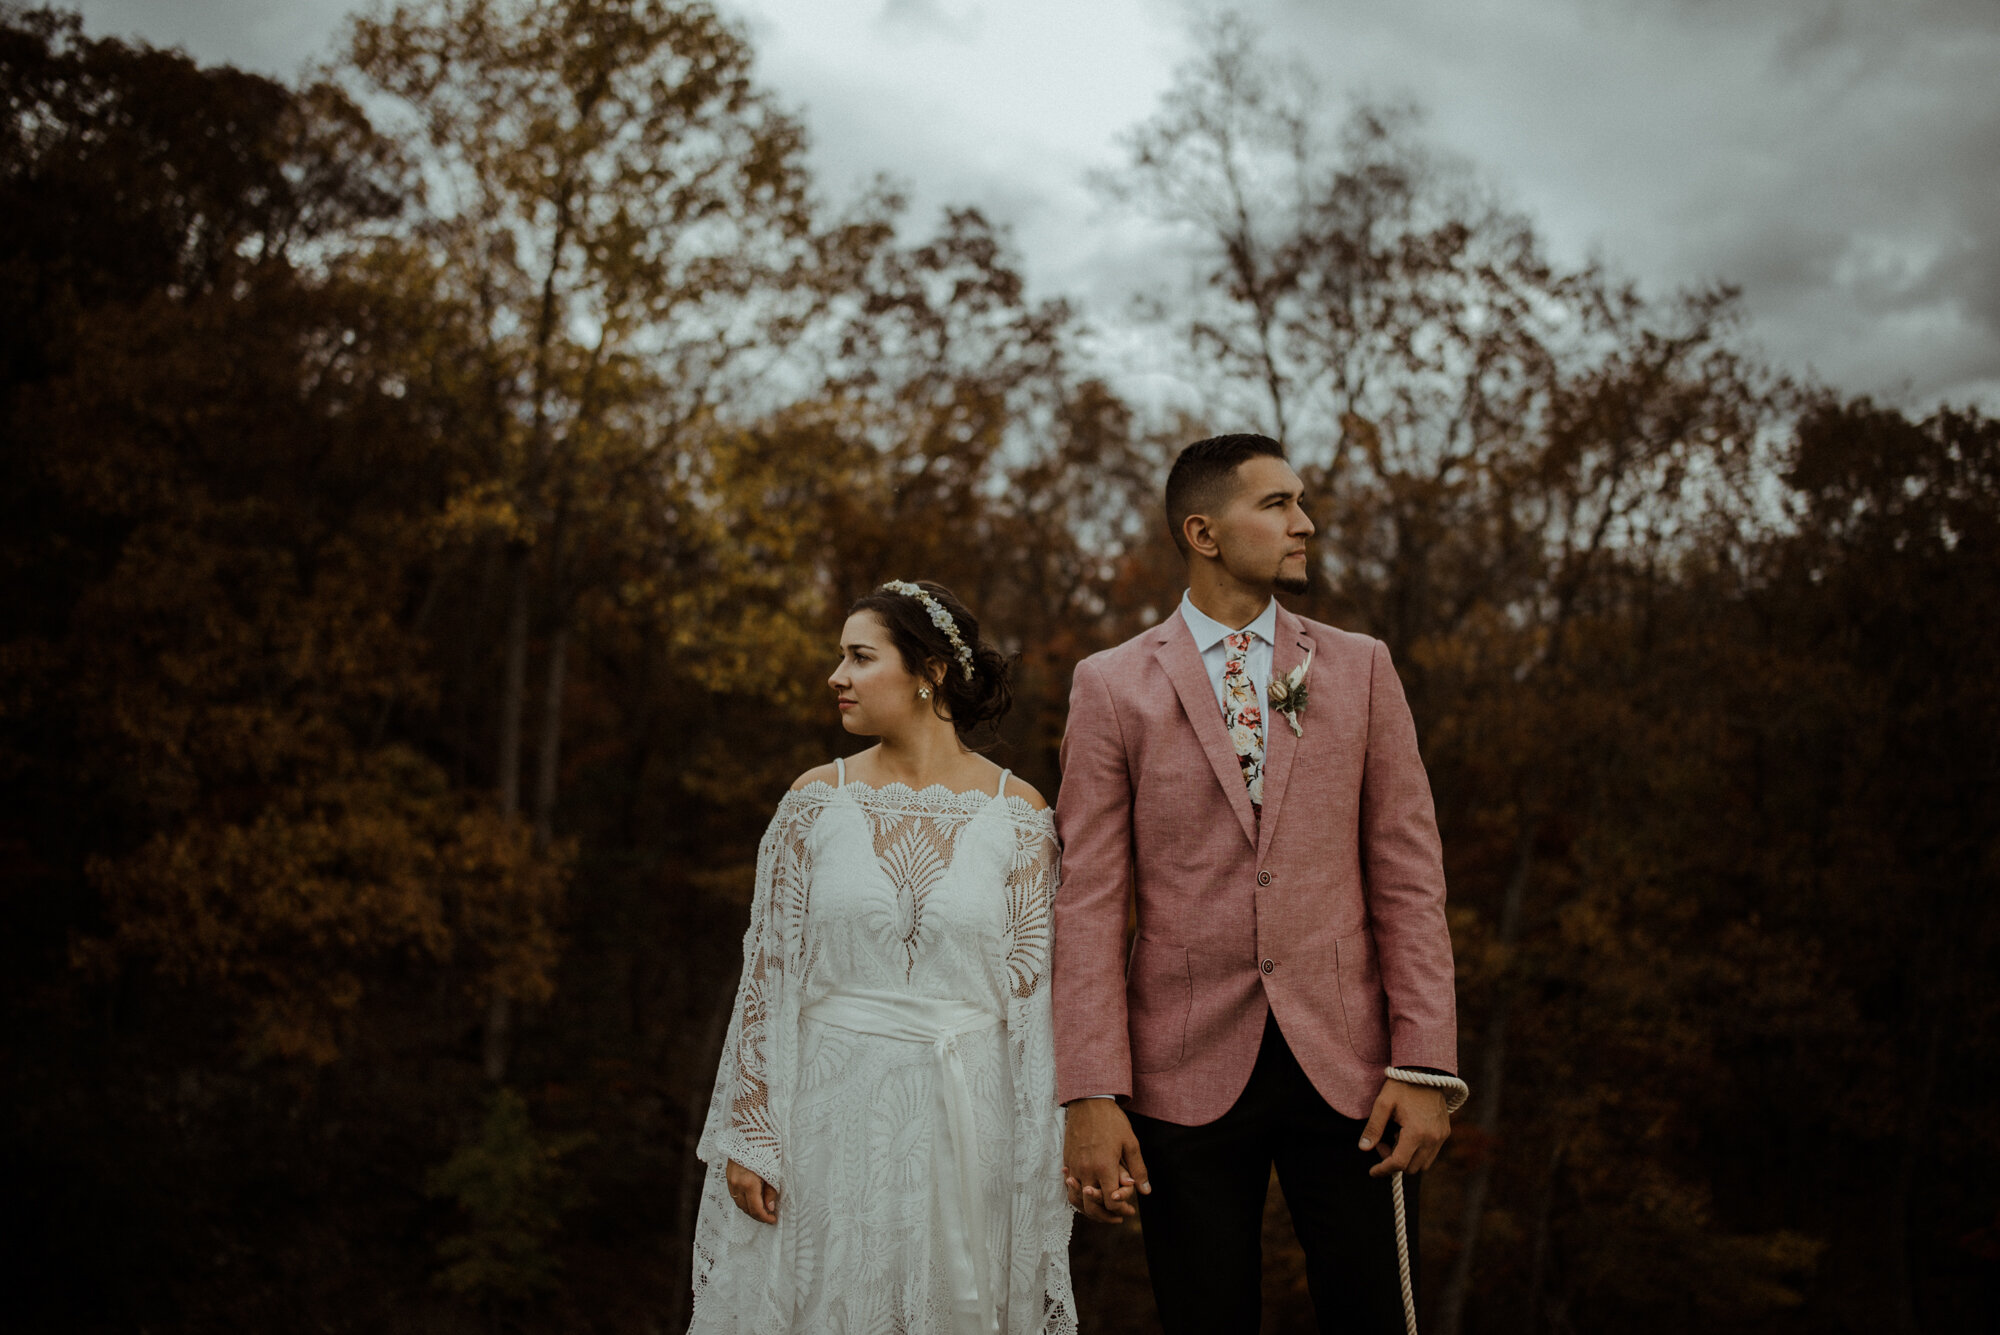 Antonia and Joey - Rainy Autumn Wedding - Small Virginia Wedding - White Sails Creative Photography_23.jpg